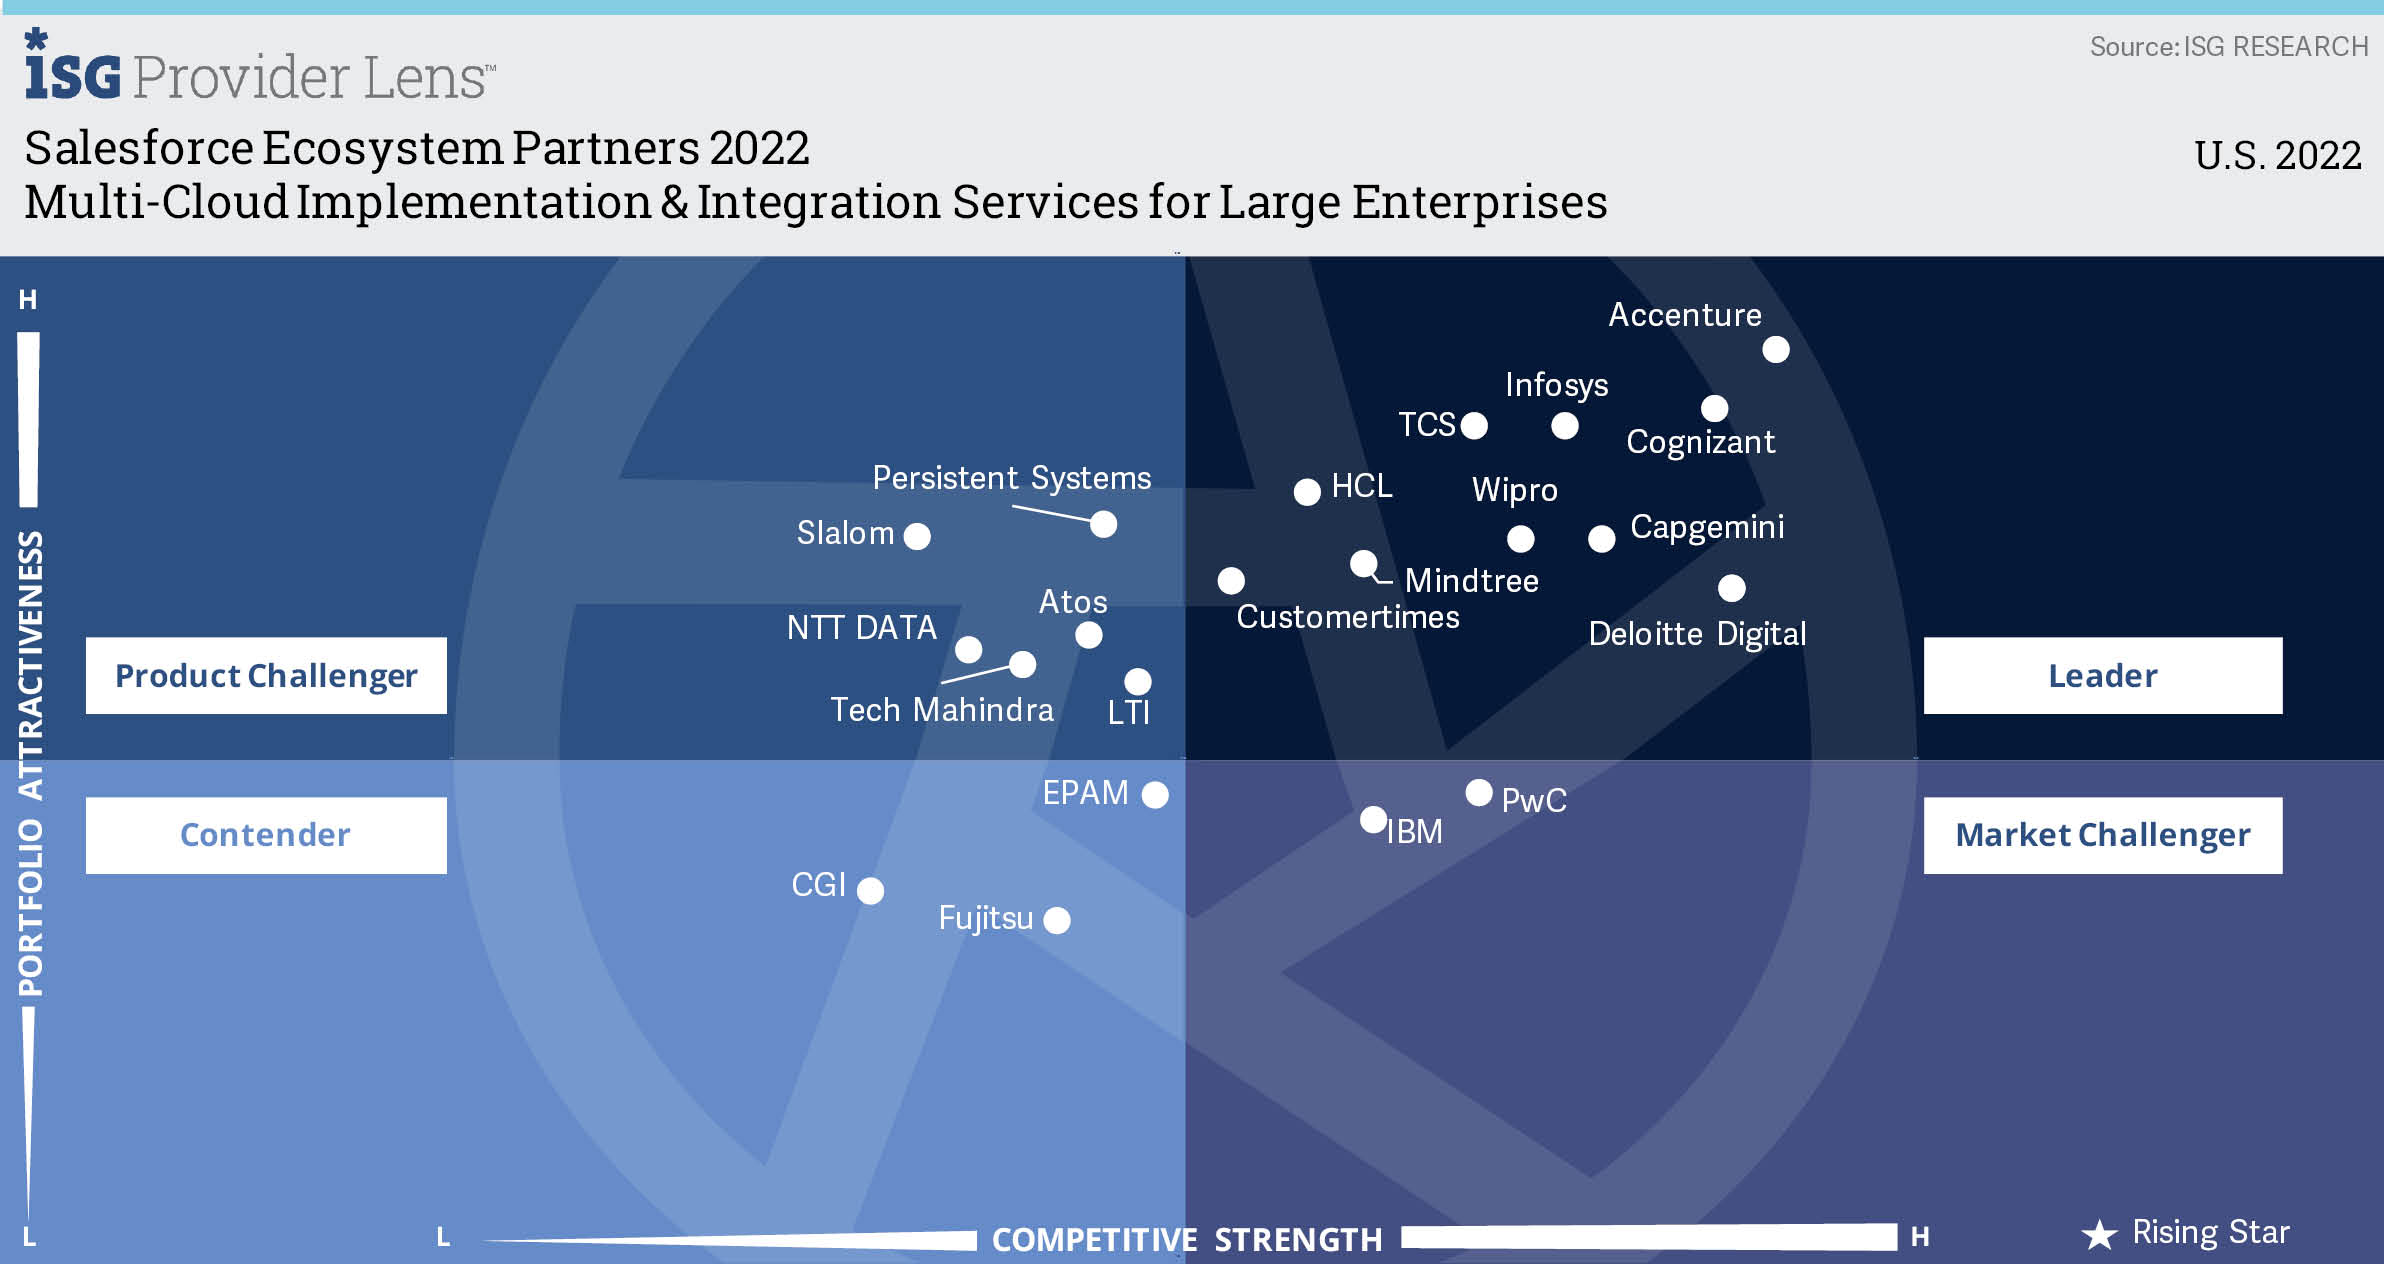 Multi-Cloud Implementation & Integration Services for Large